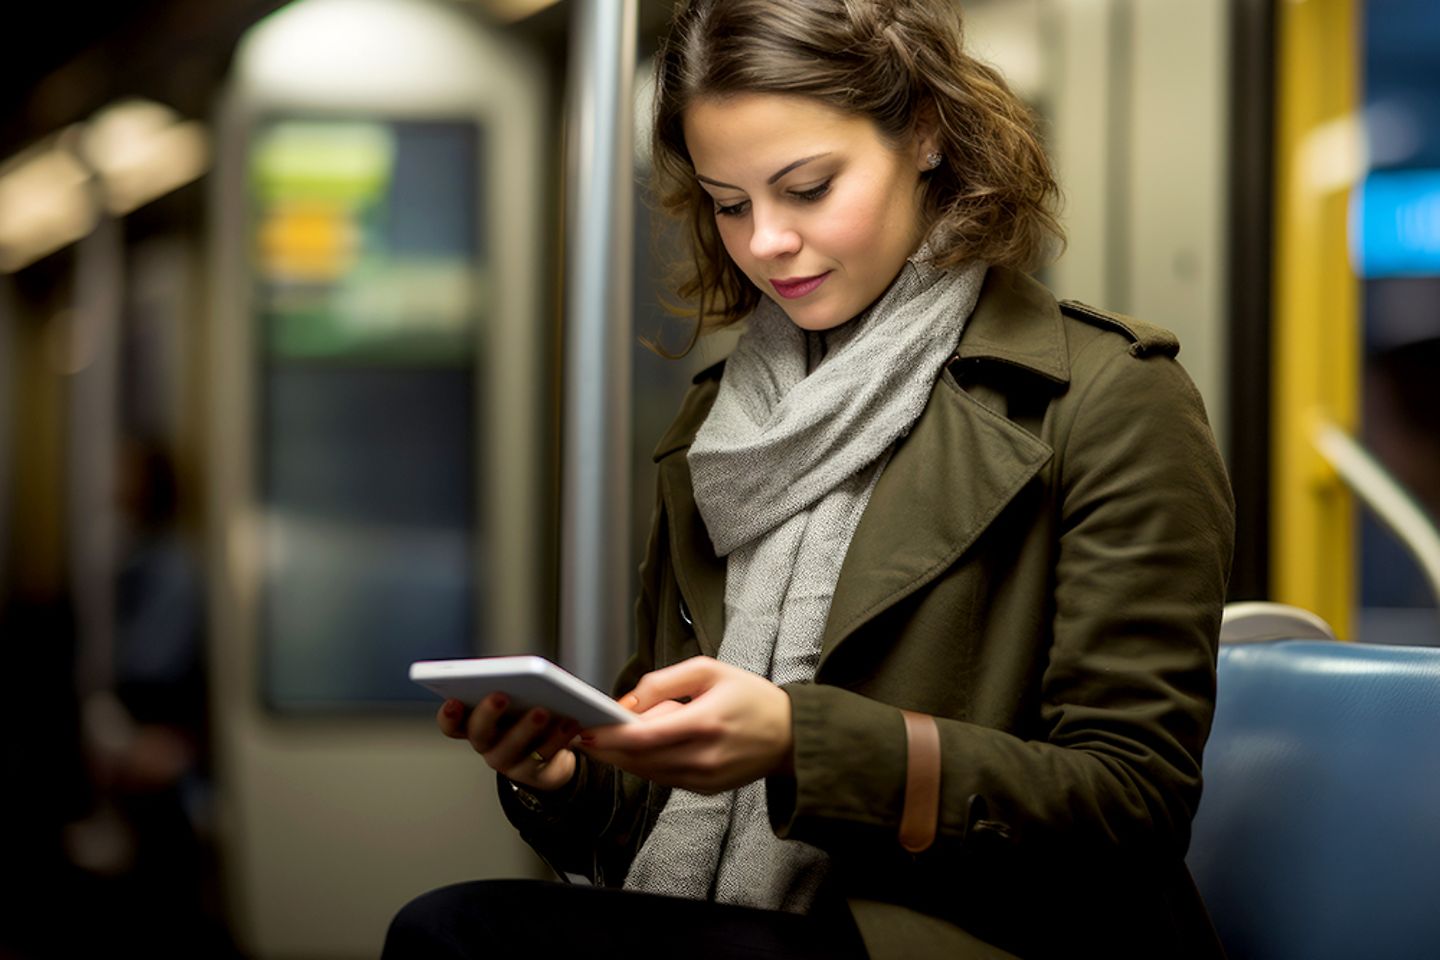  Female passenger using public transport app in the train